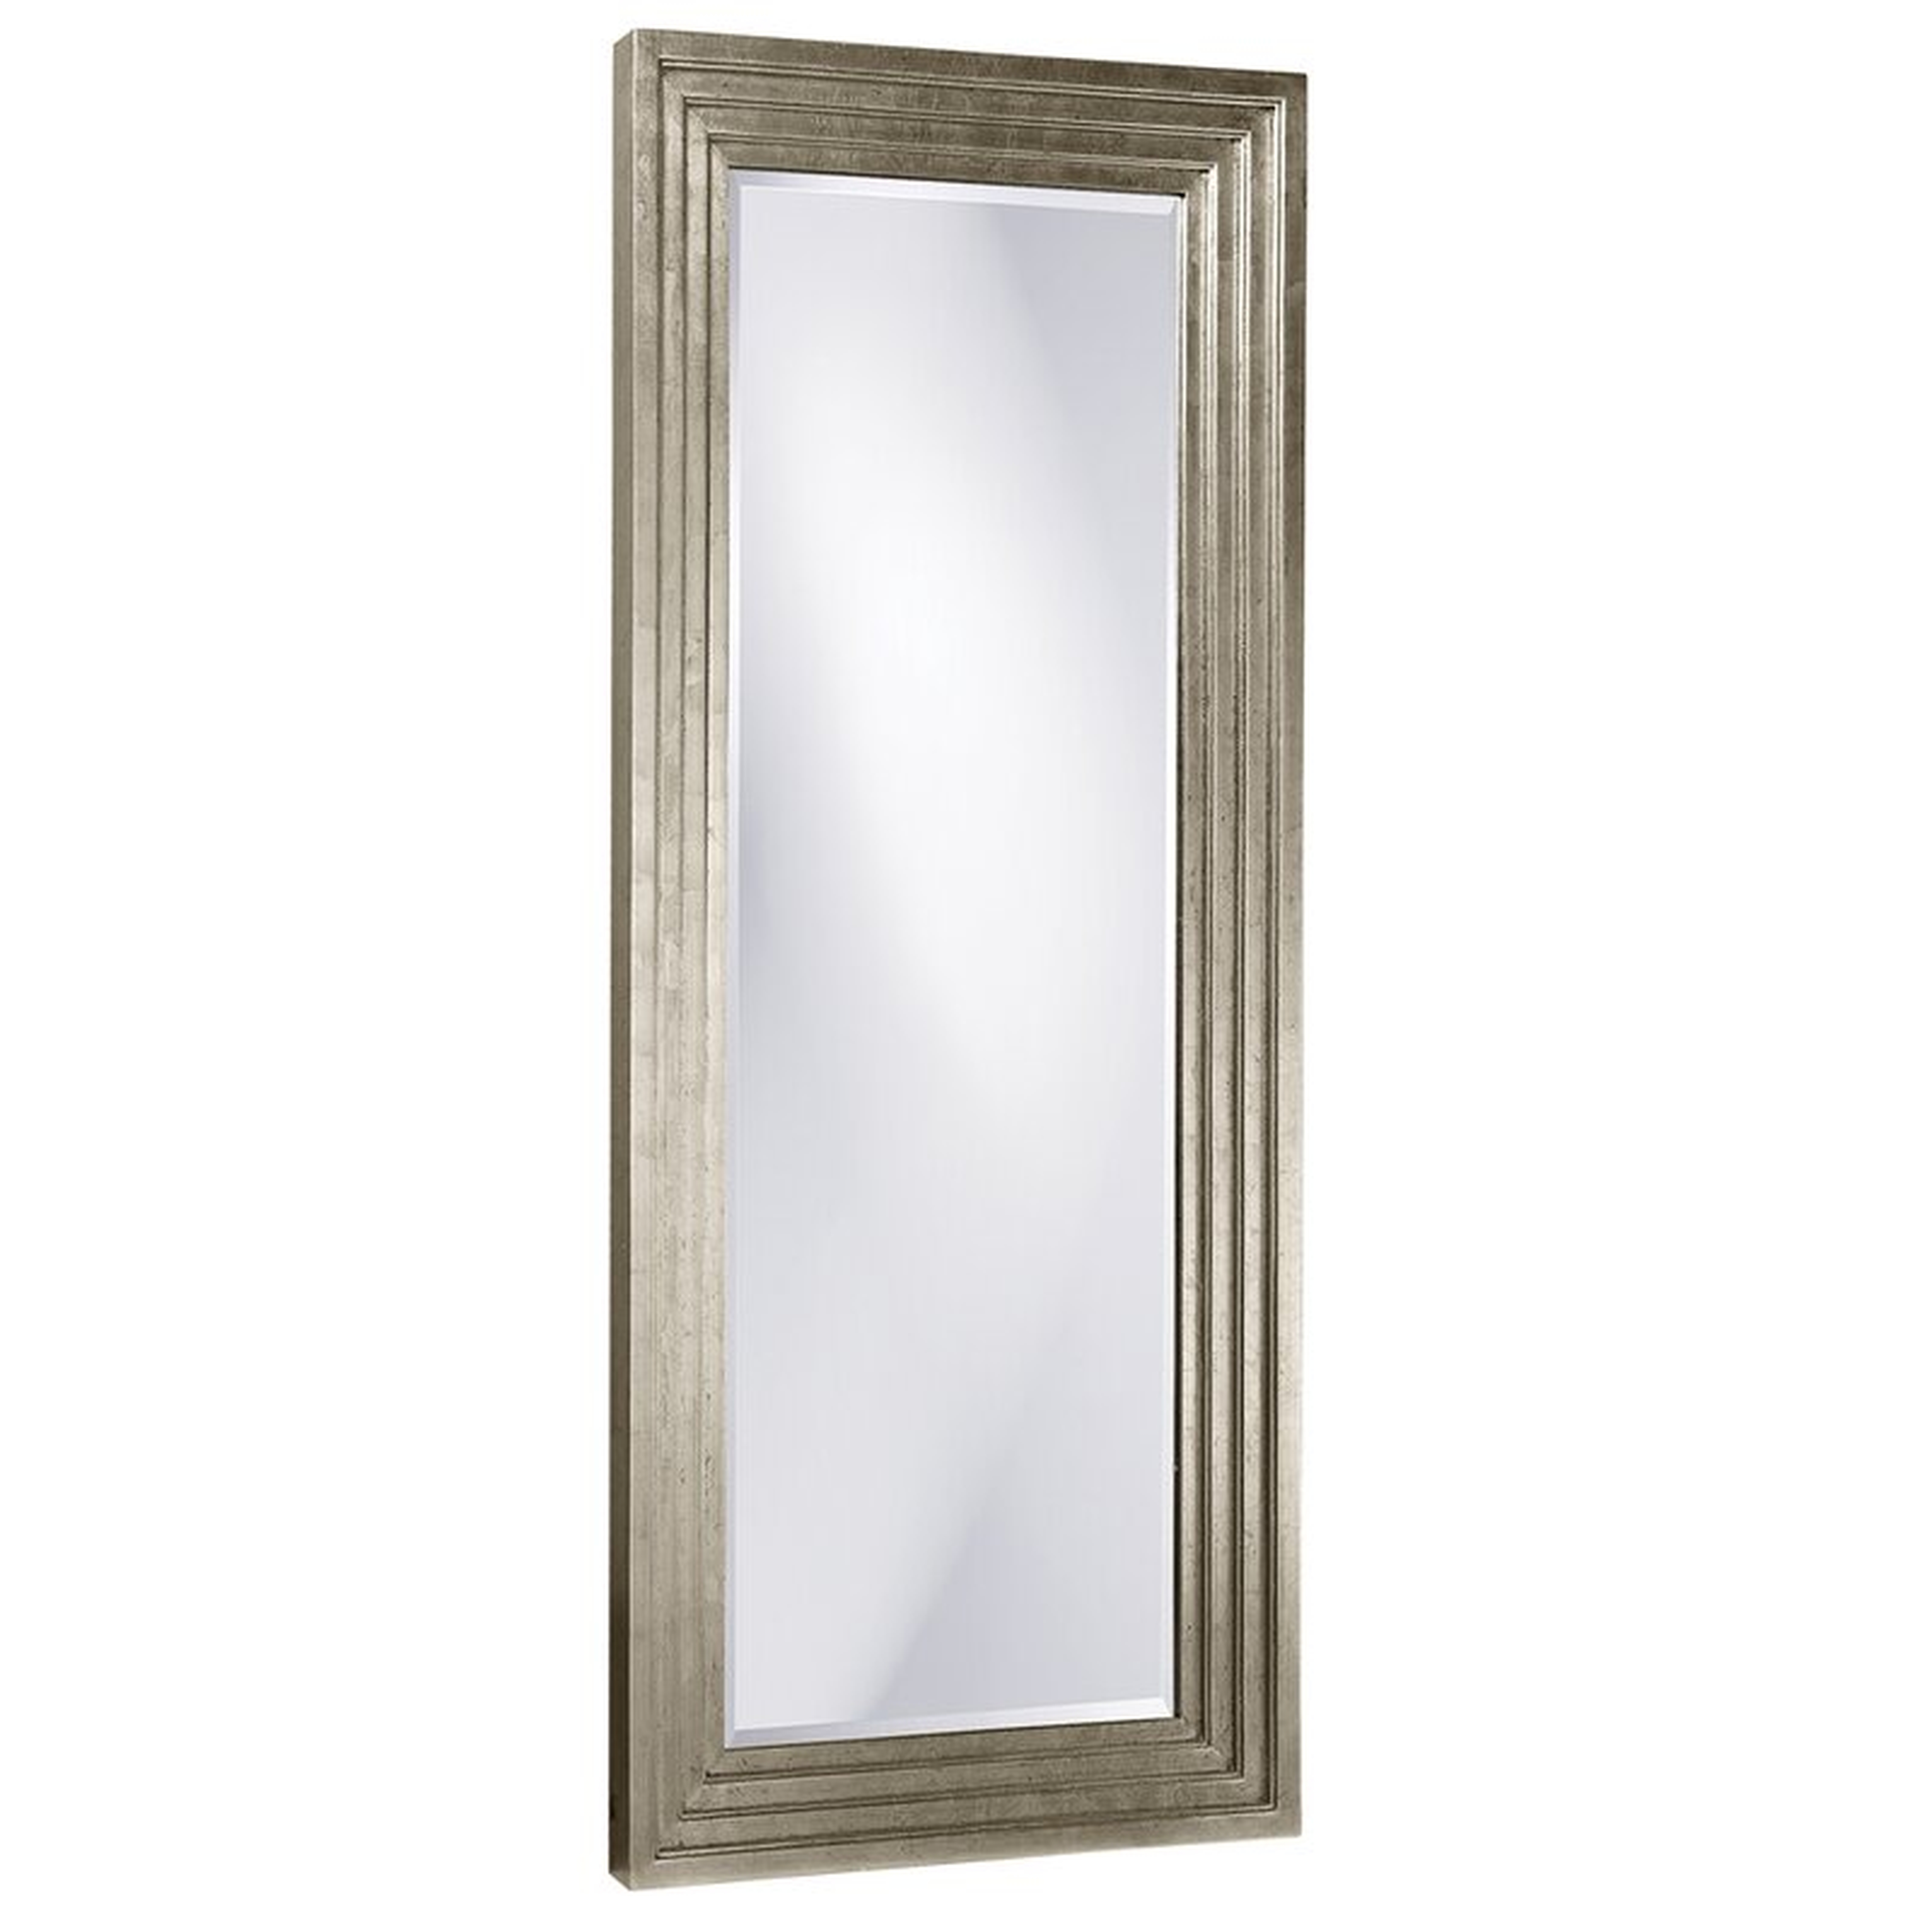 Delano Modern & Comtemporary Beveled Full Length Mirror Size: 82" x 34", Finish: Silver - Perigold